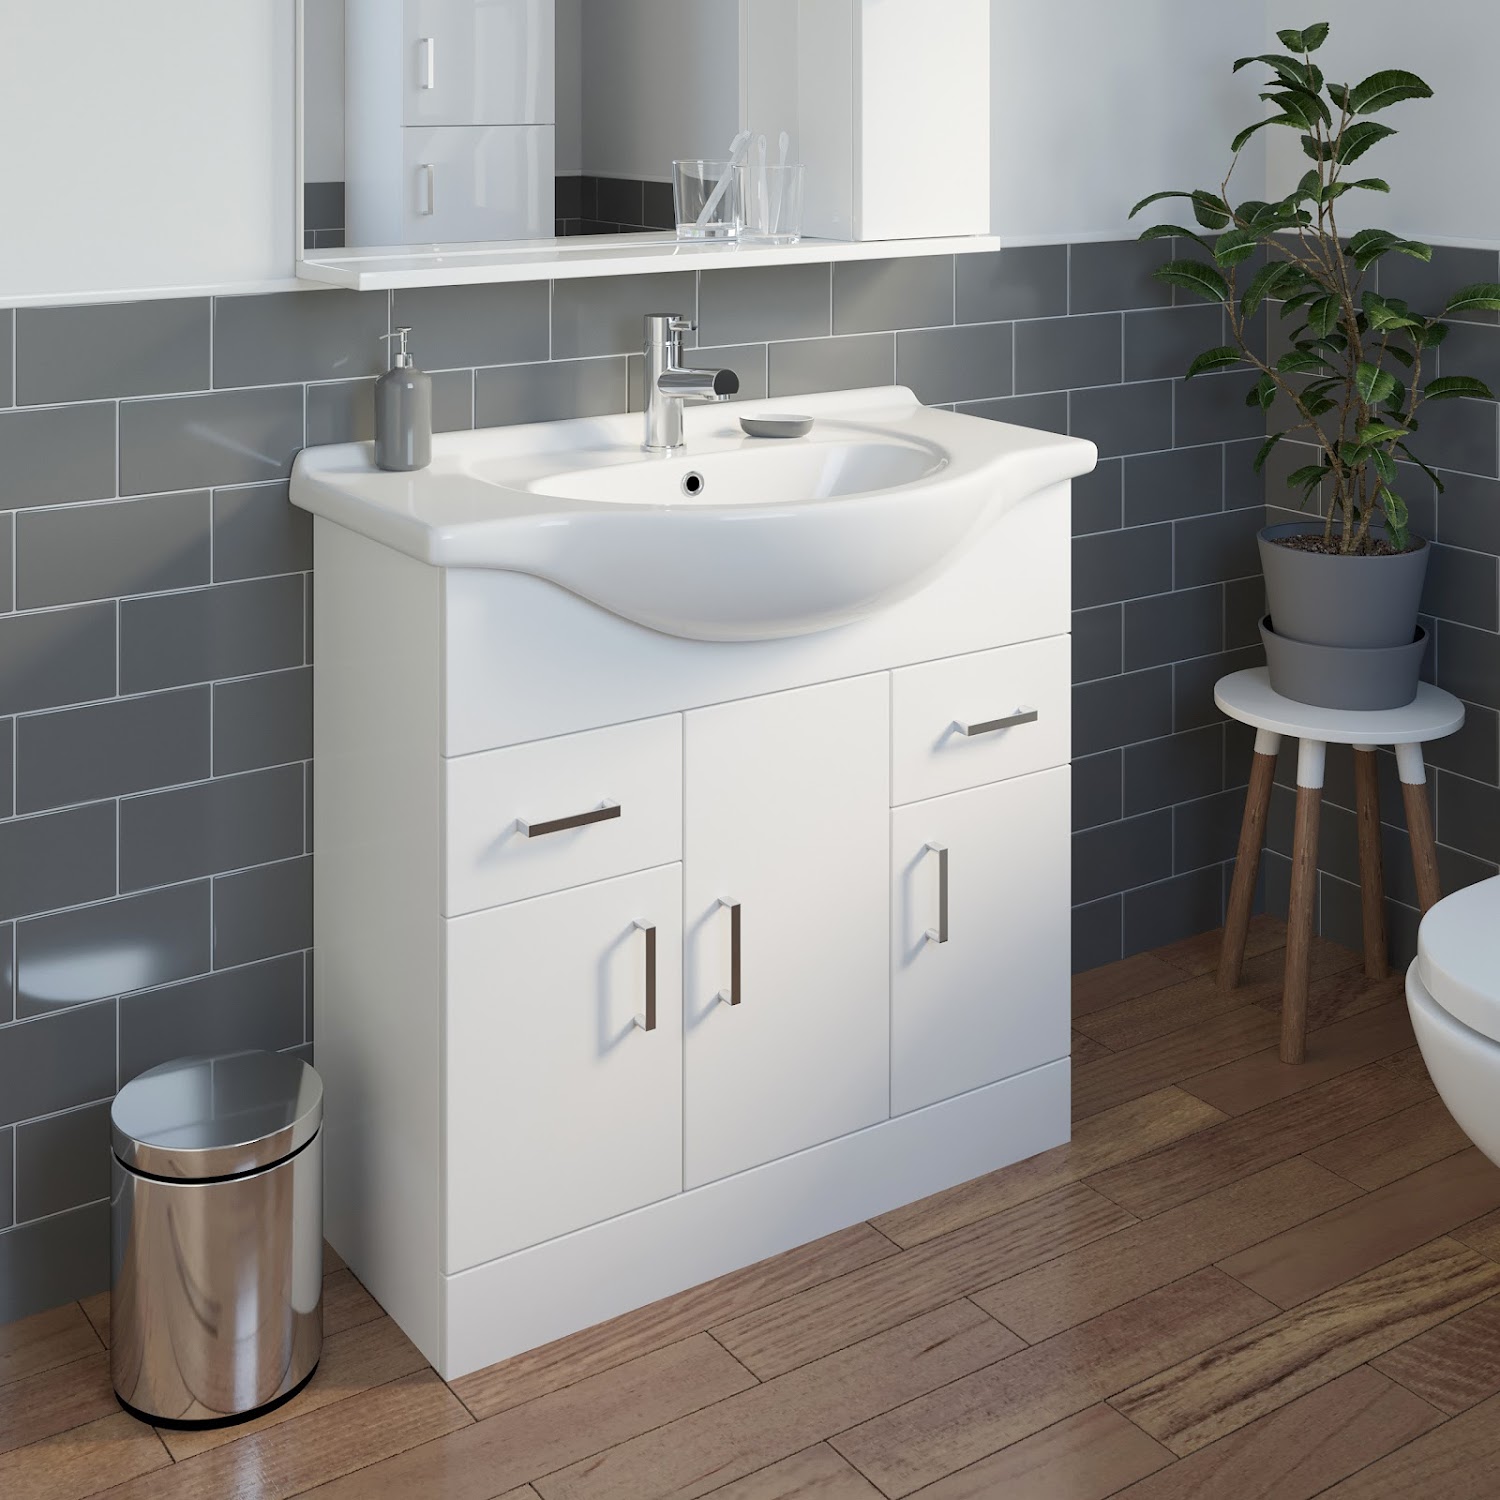 850mm Bathroom Vanity Unit Basin Sink Floorstanding Gloss White